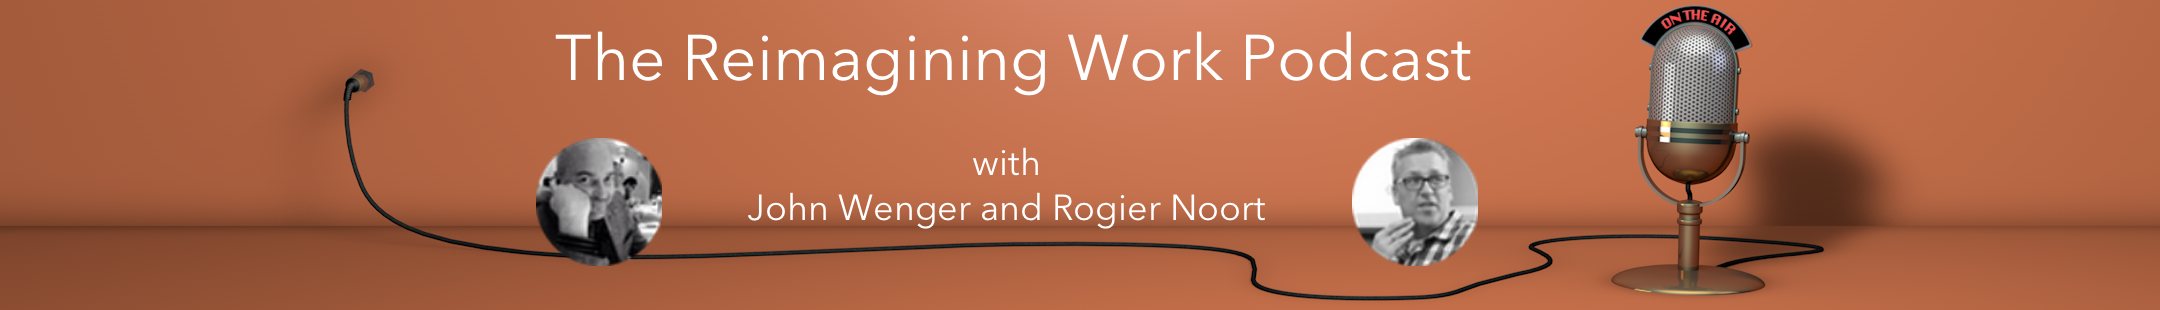 reimagining work podcast